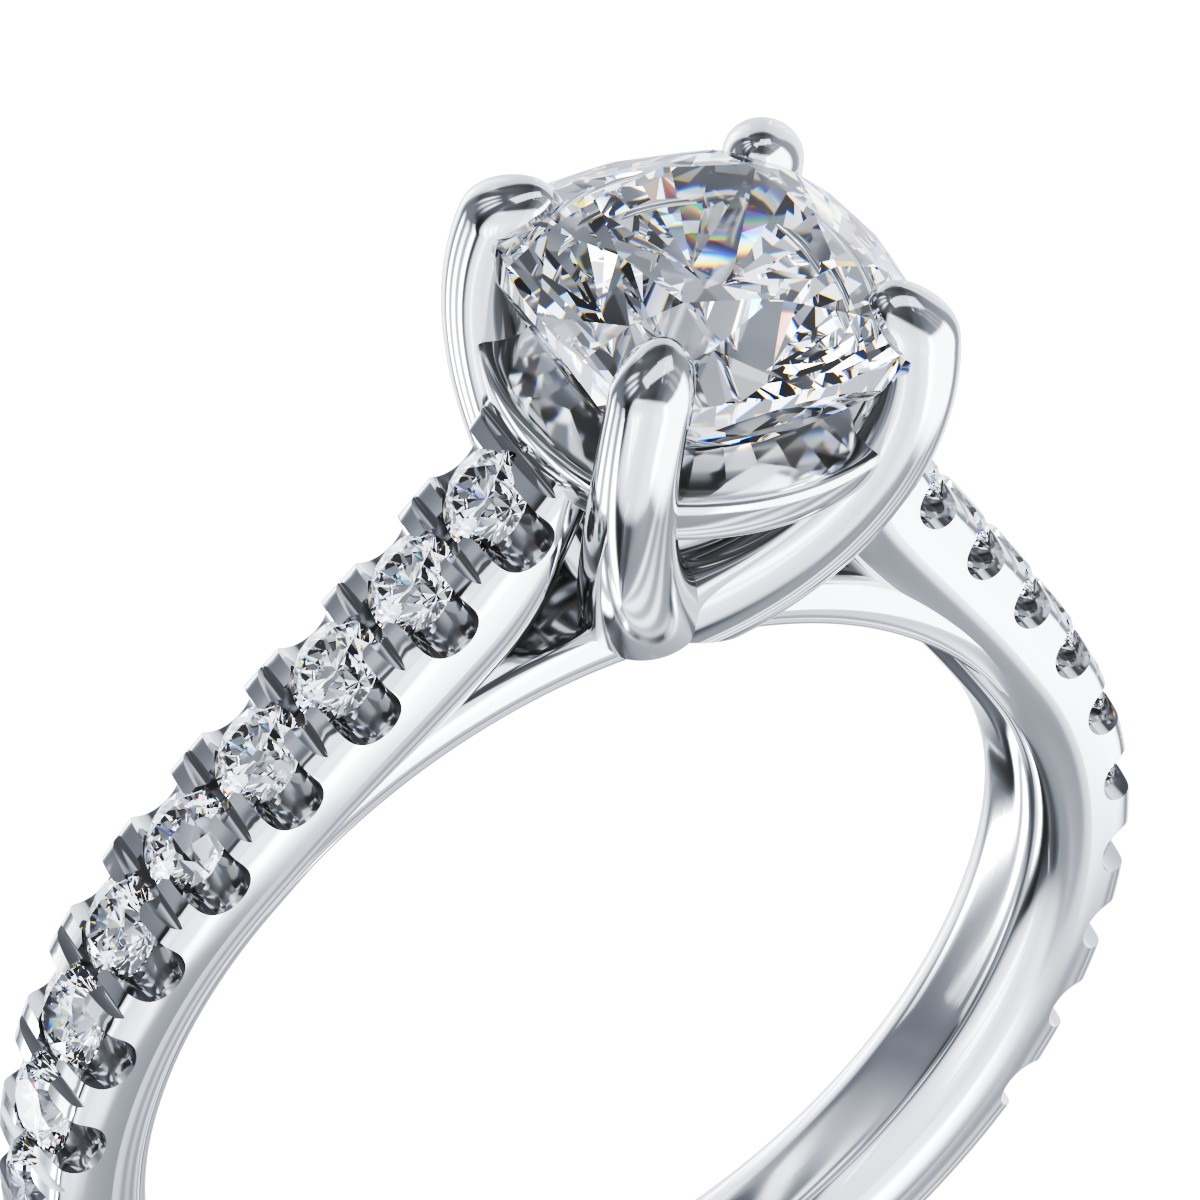 Diamond platinum engagement ring with 1.2ct diamond and 0.373ct diamonds